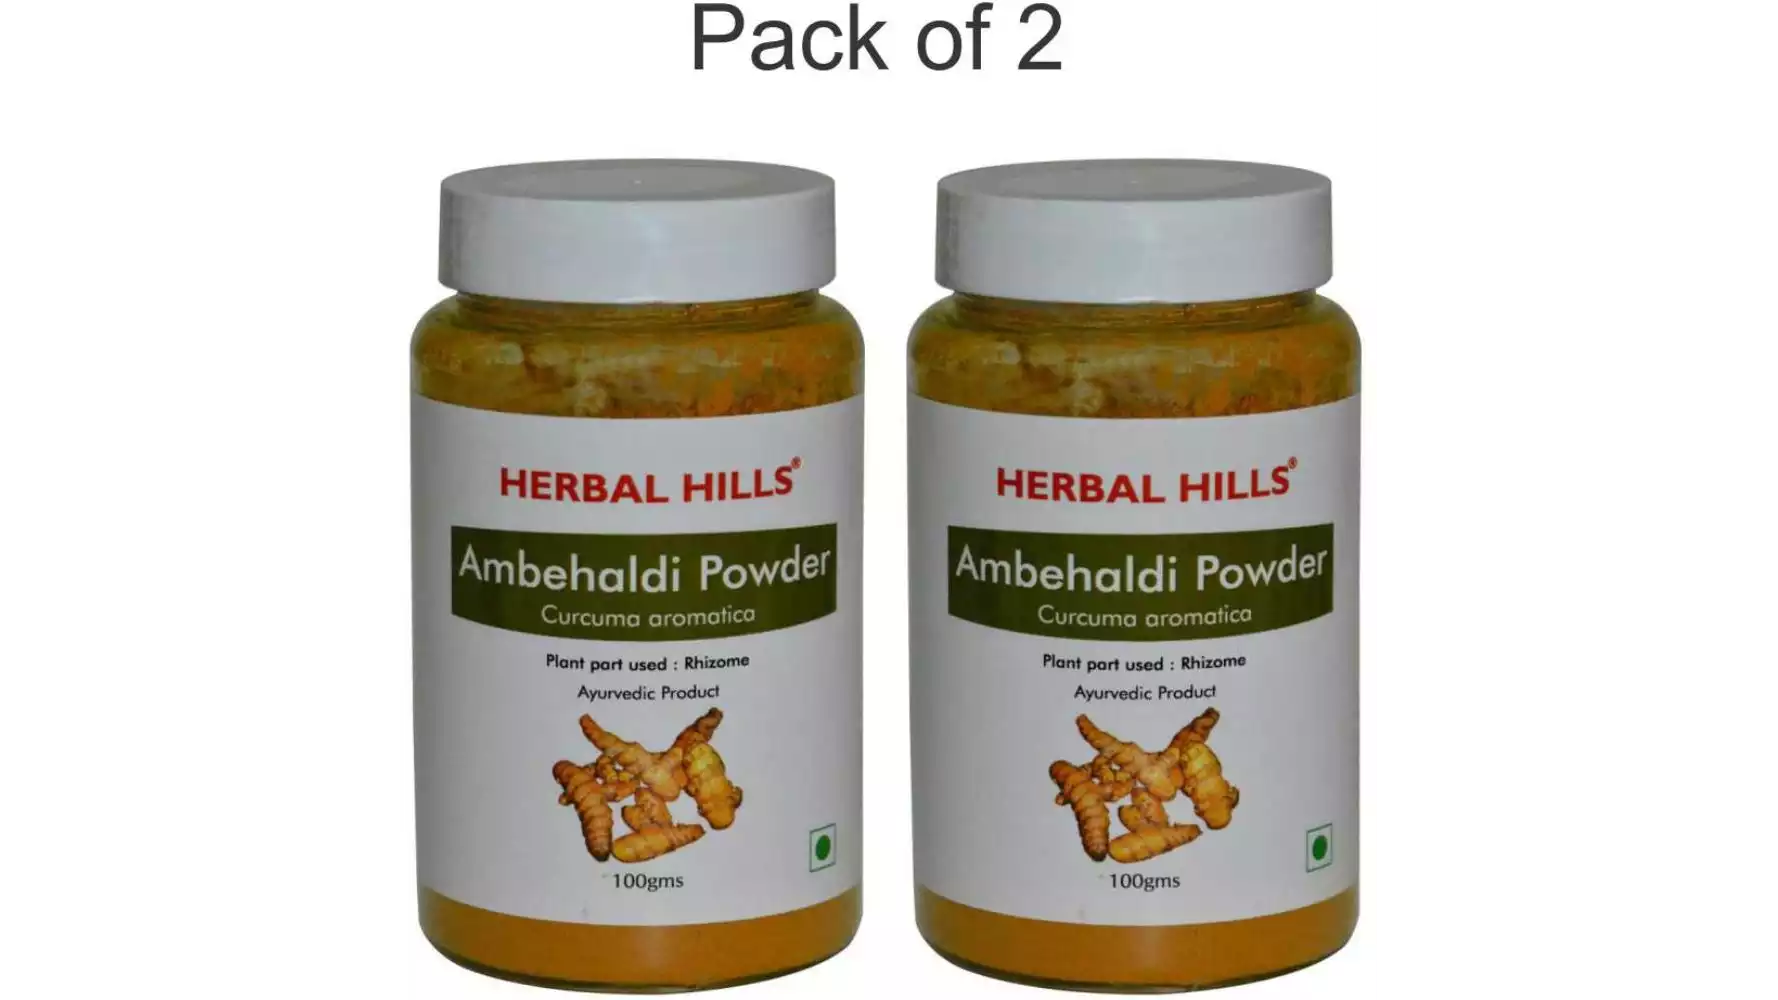 Herbal Hills Ambehaldi Powder (100g, Pack of 2)